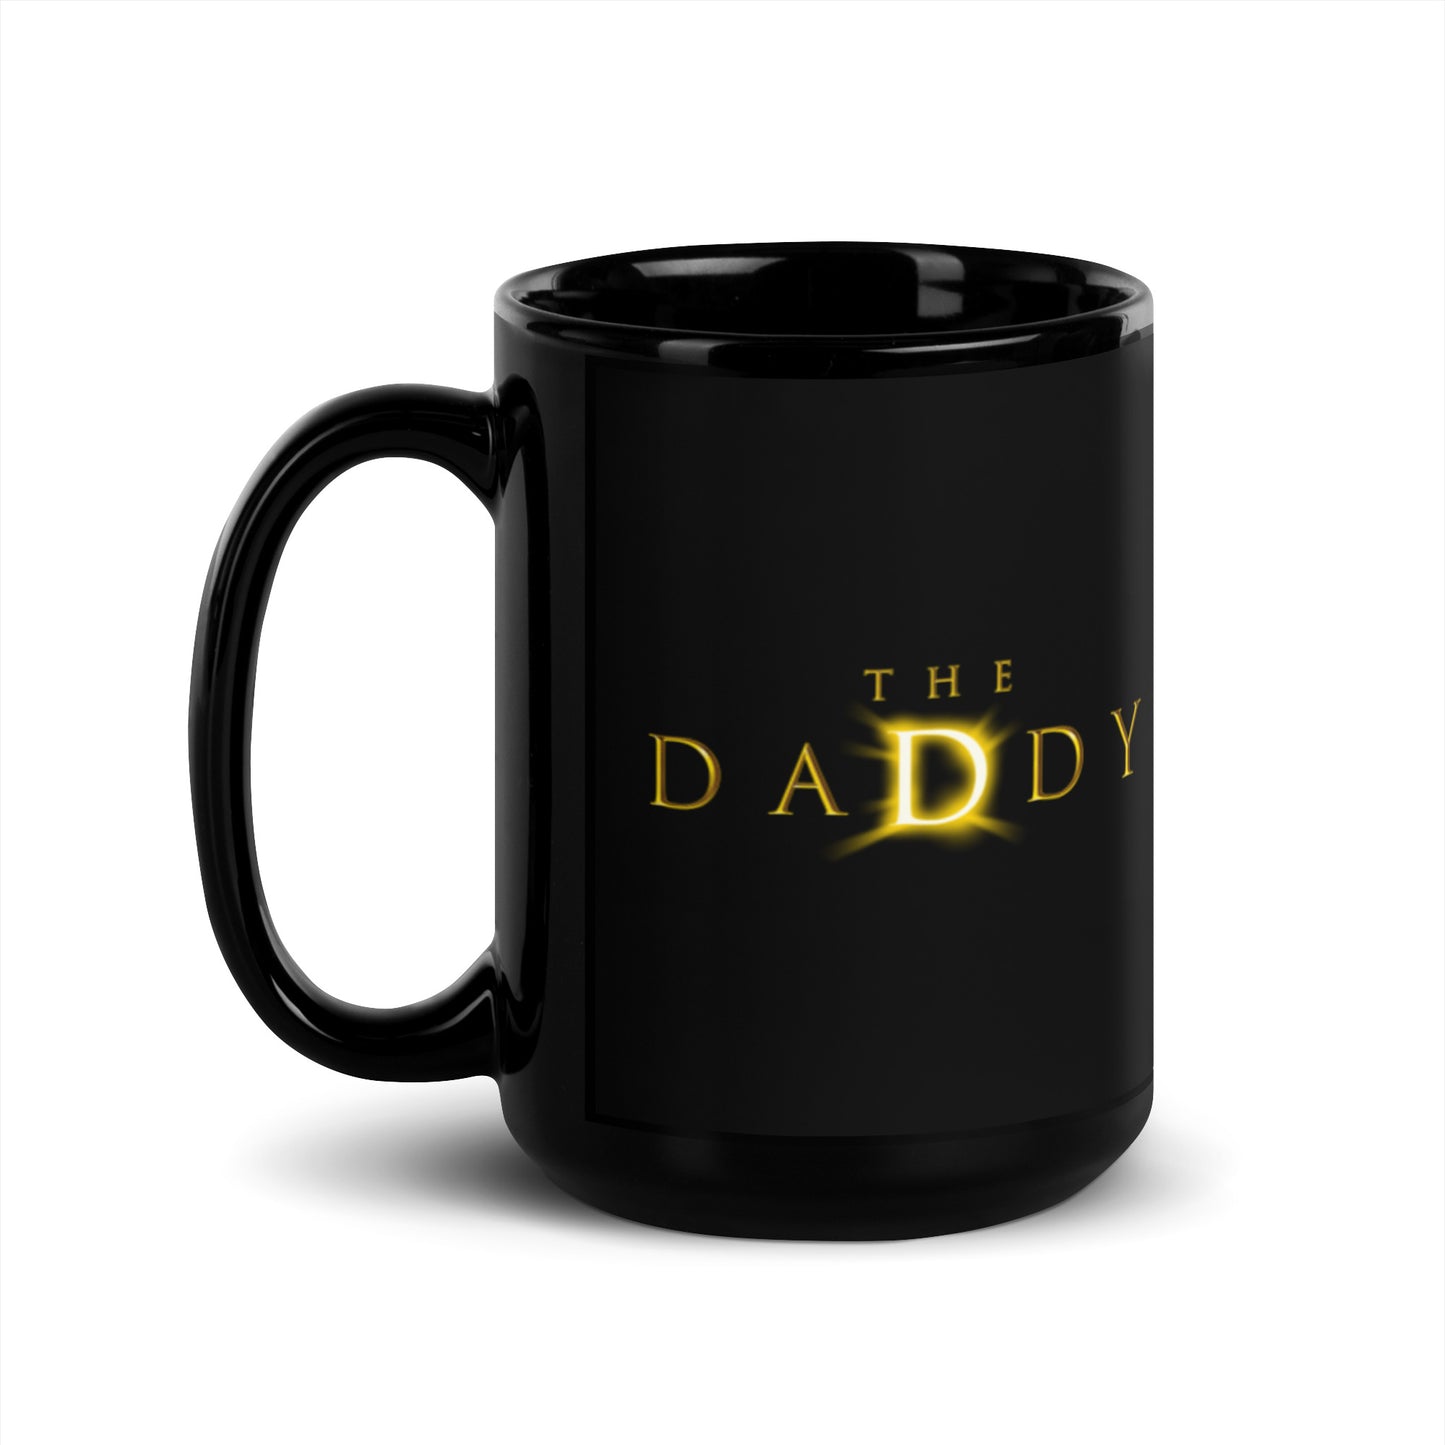 The Daddy mug